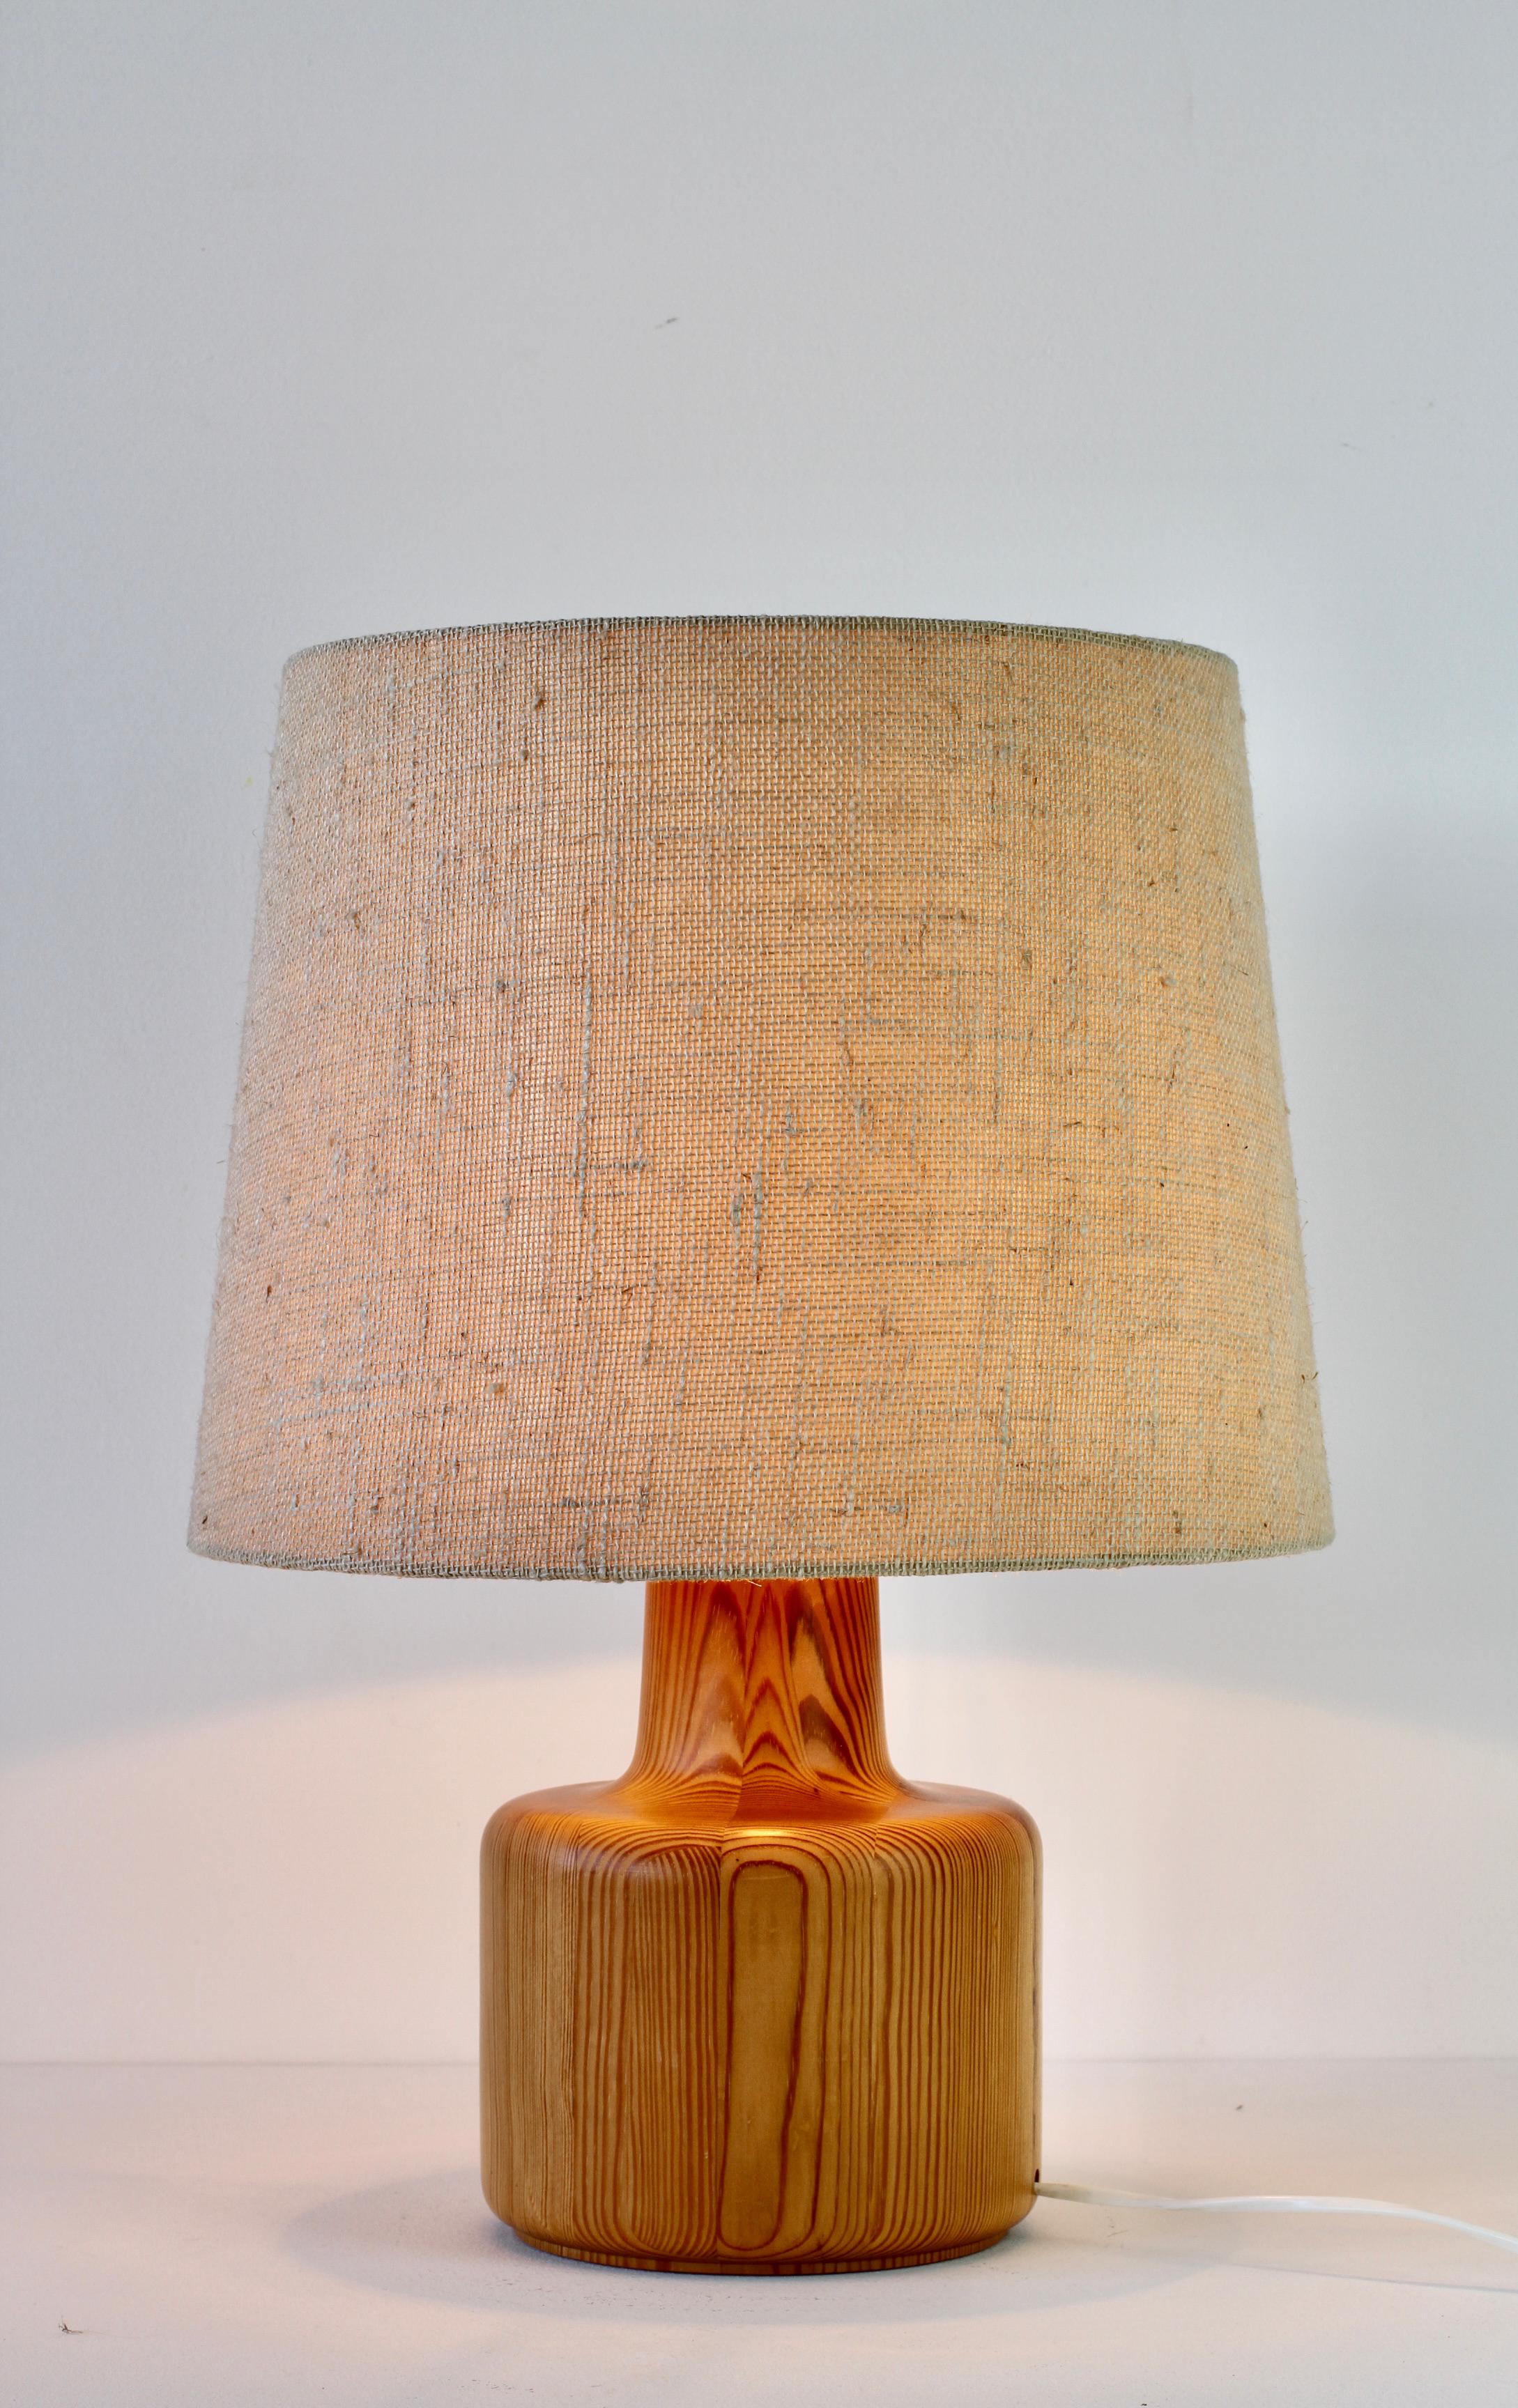 1970s Large Scandinavian Style Pine Wood Table Light Lamp Original Fabric Shade 8